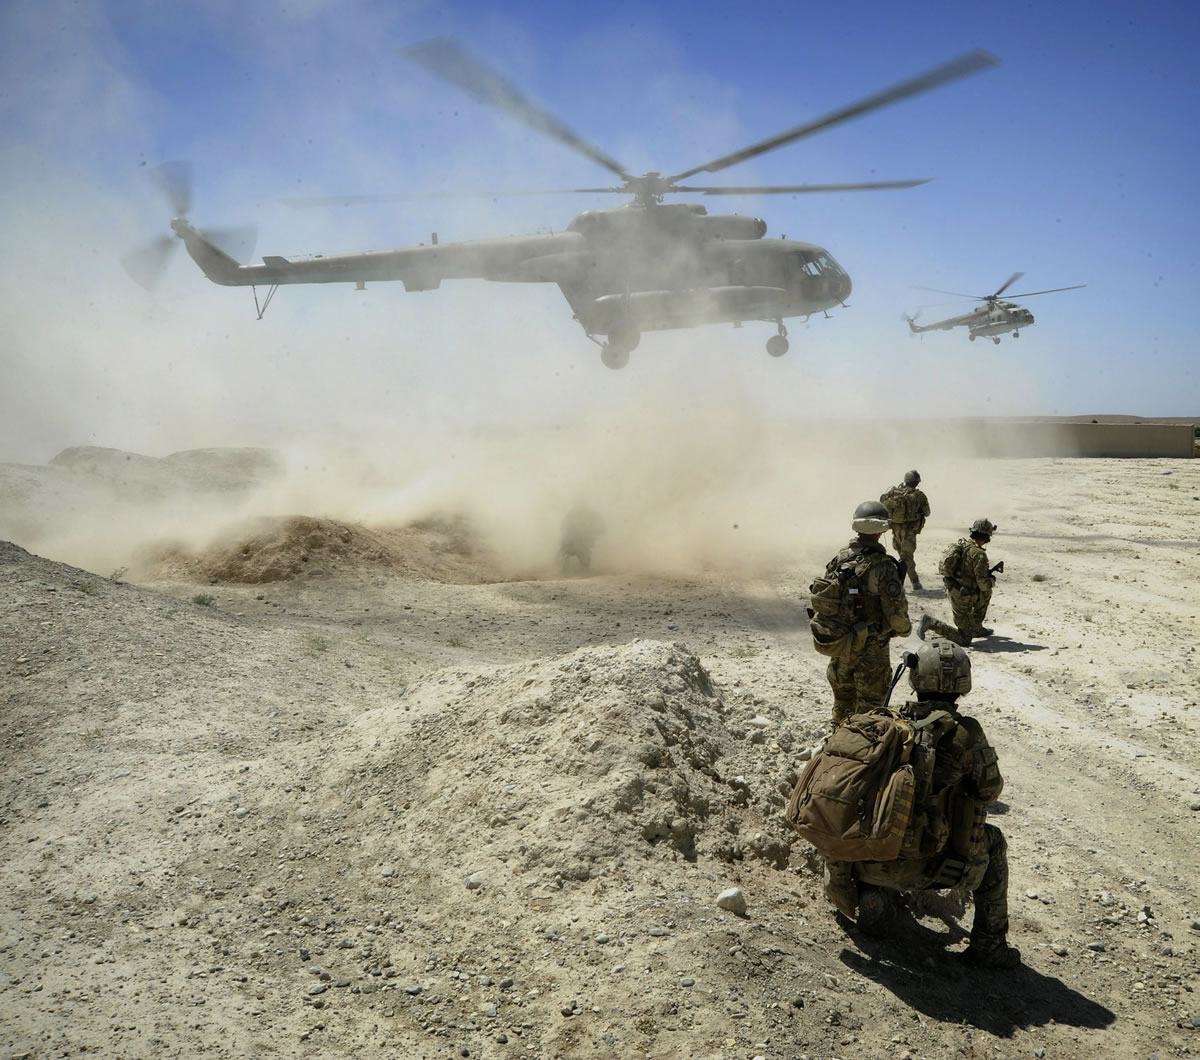 Australian Defense Force
Members of the Australian Defense Force await the arrival of two Mi-17 helicopters in Kandahar, Afghanistan, in 2011.